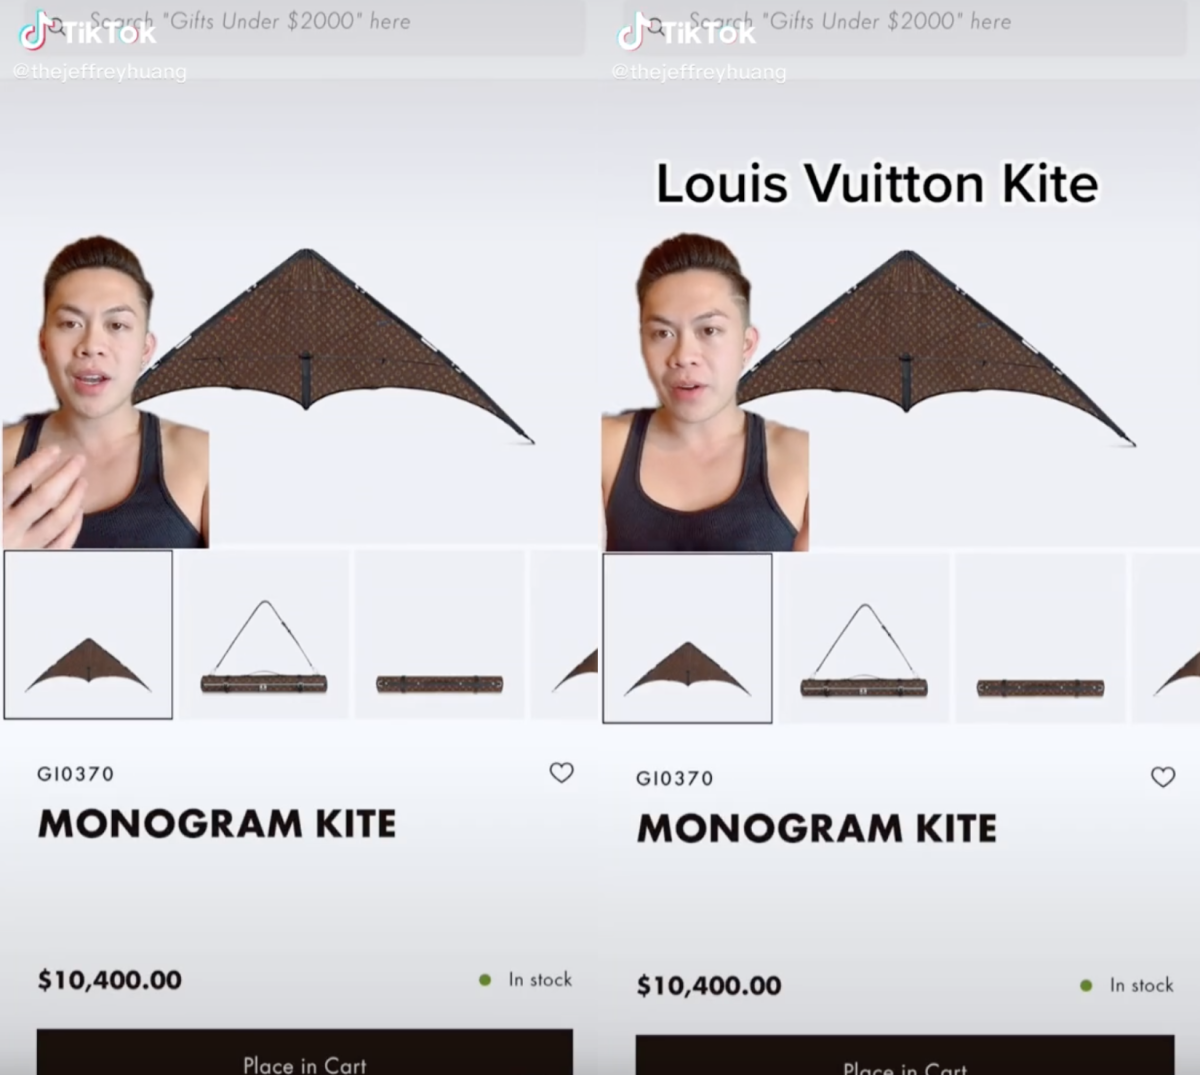 Louis Vuitton Gifts Under 10000 Dollars